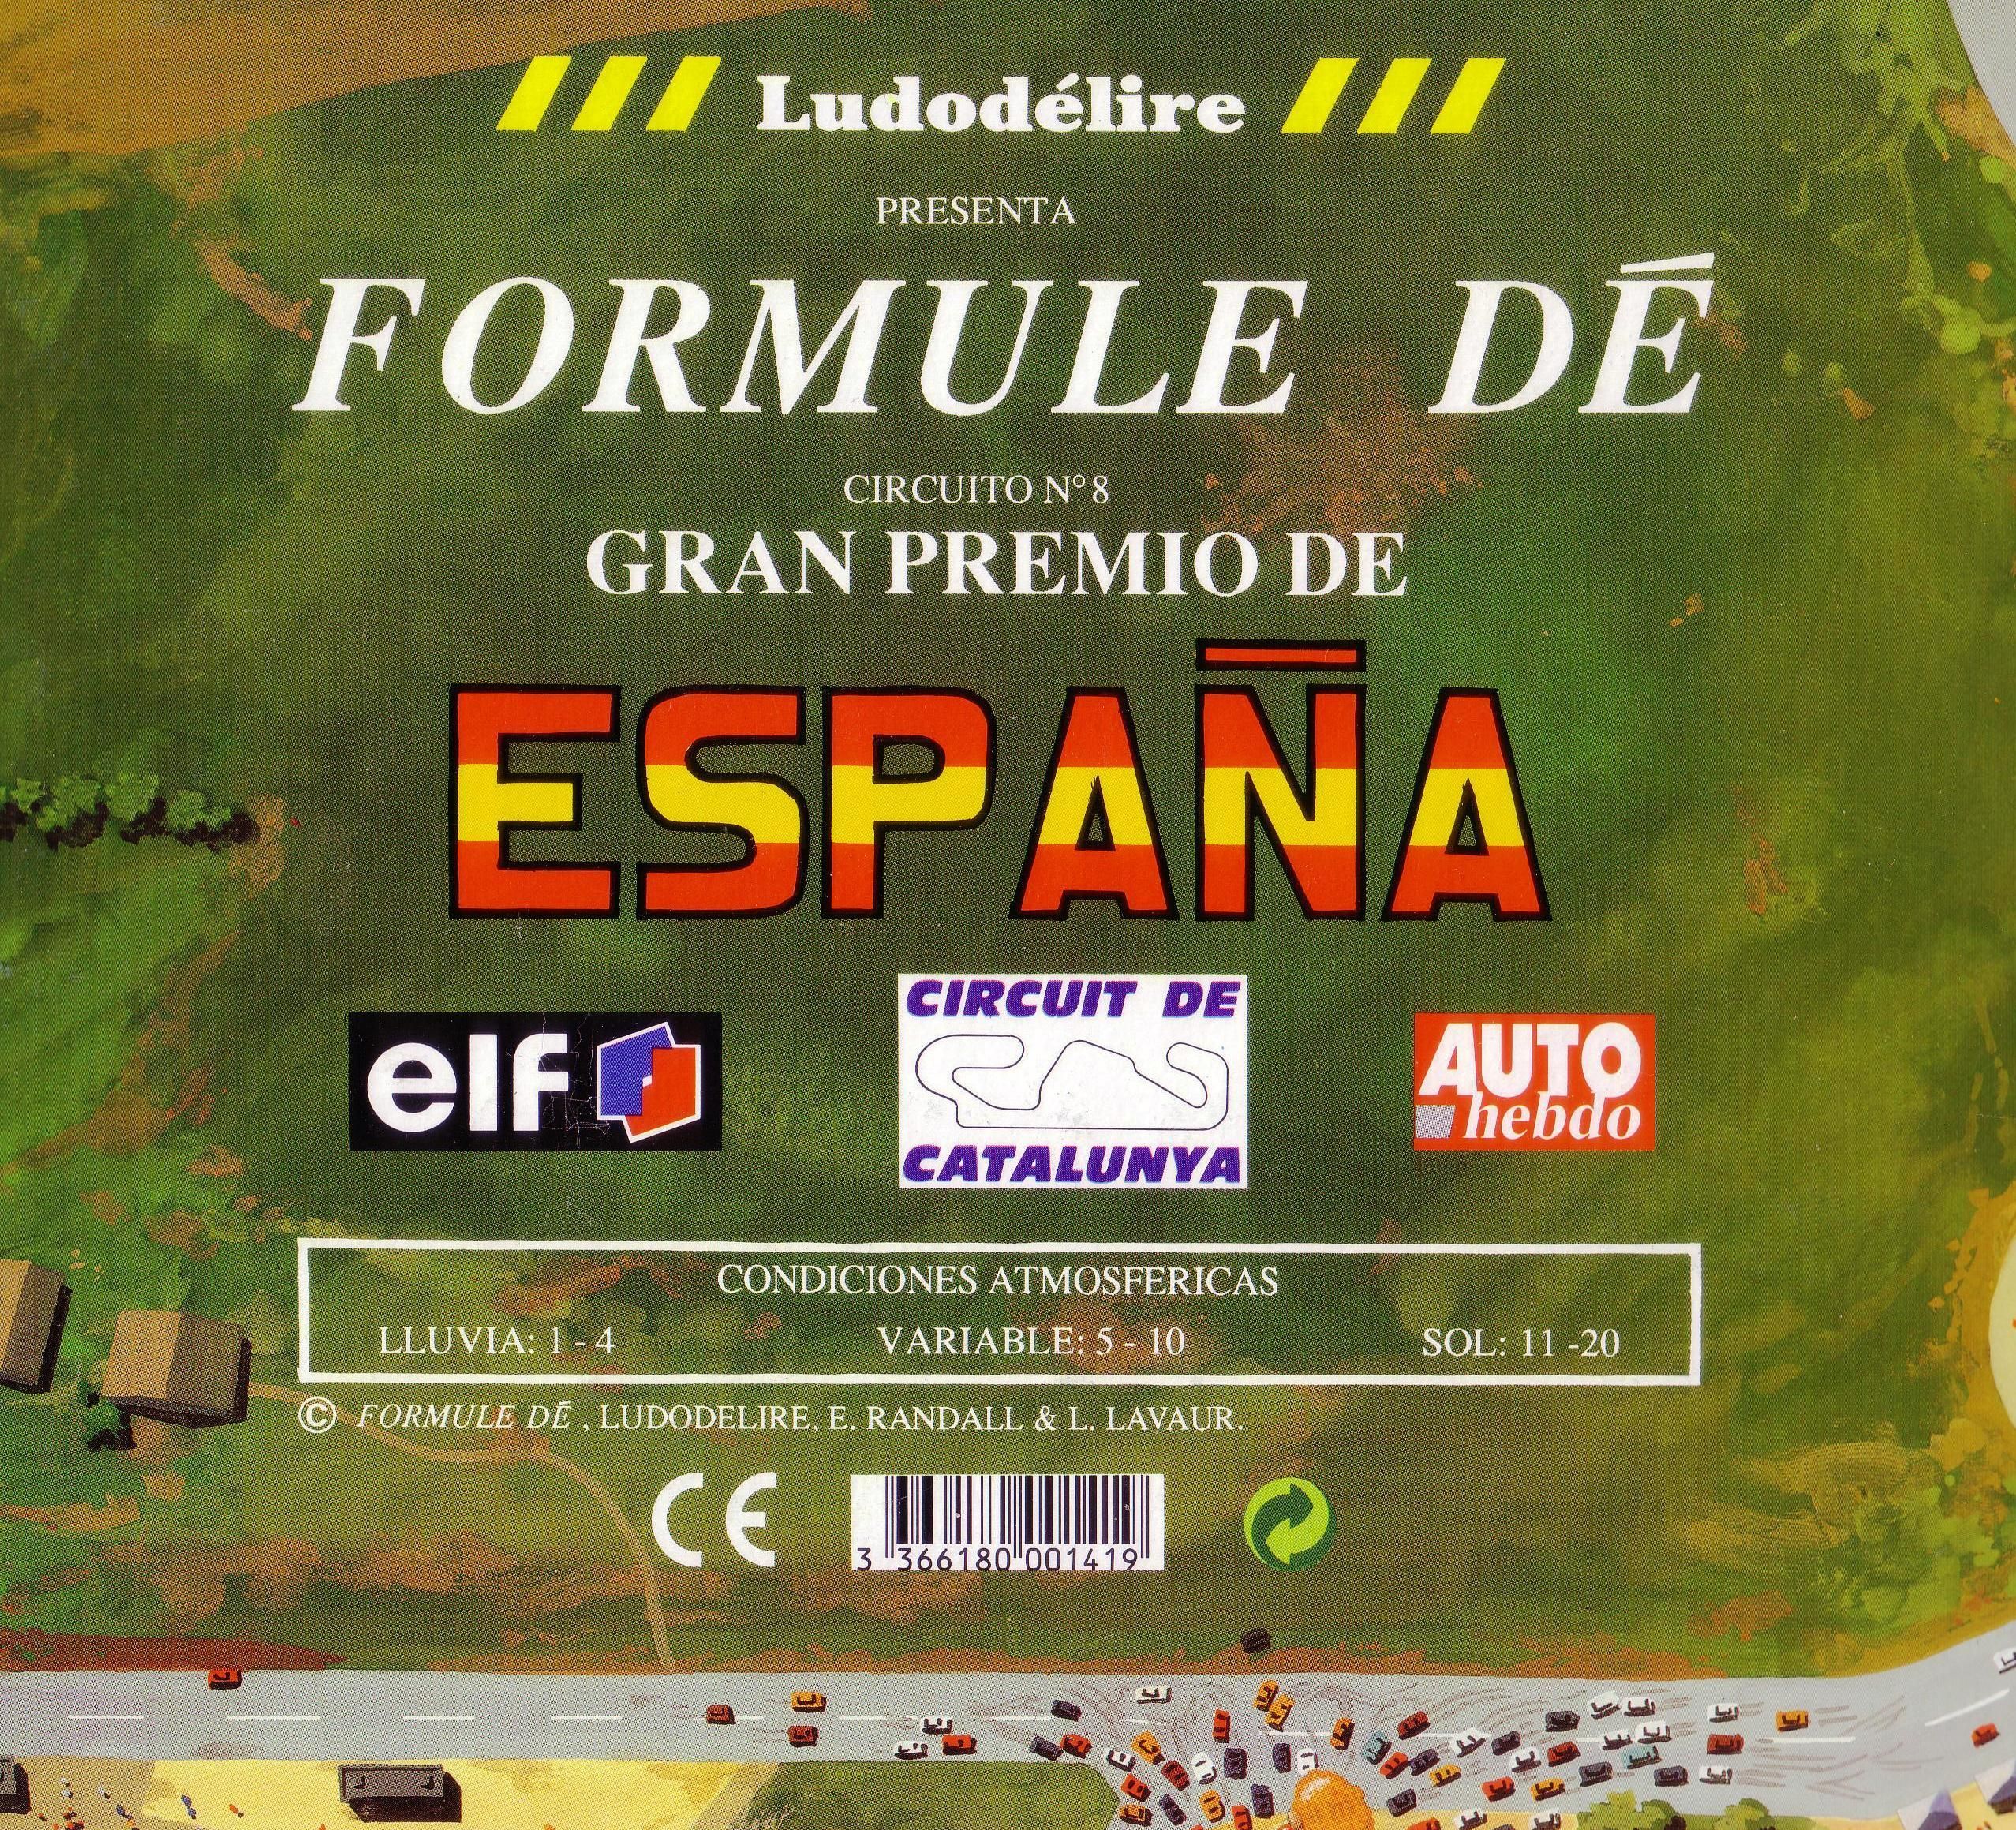 Formule Dé Circuit № 8: GRAN PREMIO DE ESPAÑA – Circuit de Catalunya